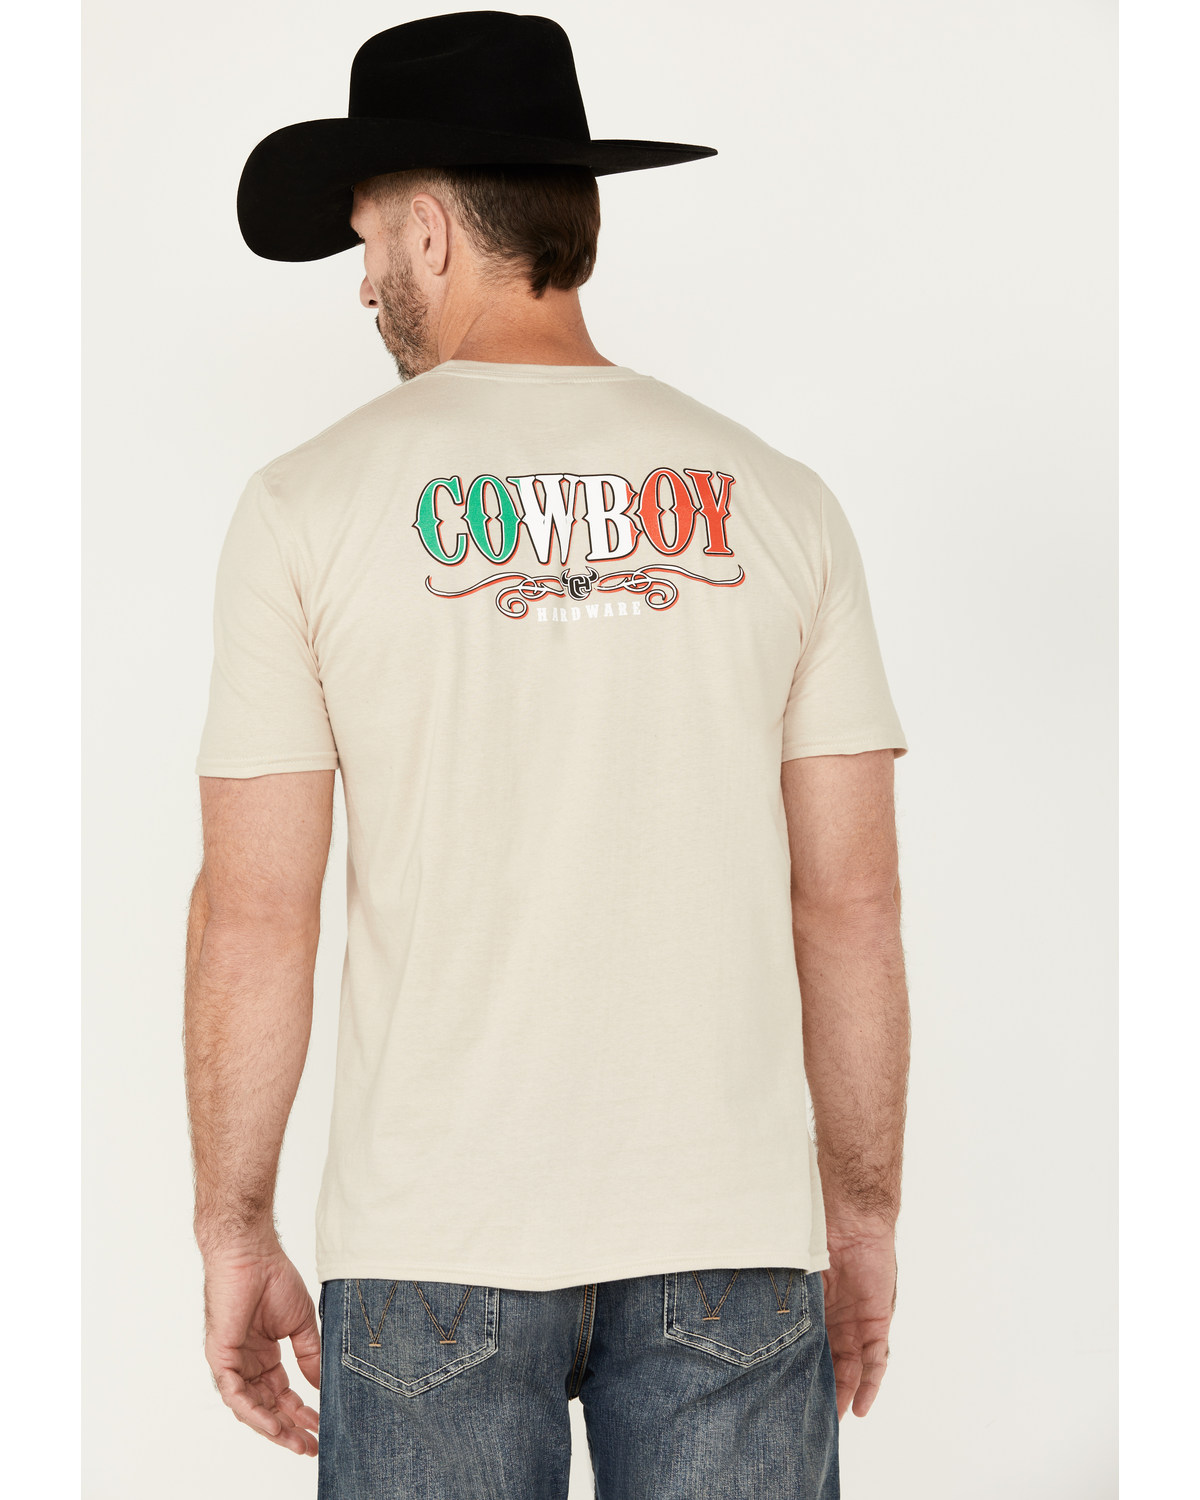 Cowboy Hardware Men's Mexican Bull Short Sleeve Graphic T-Shirt